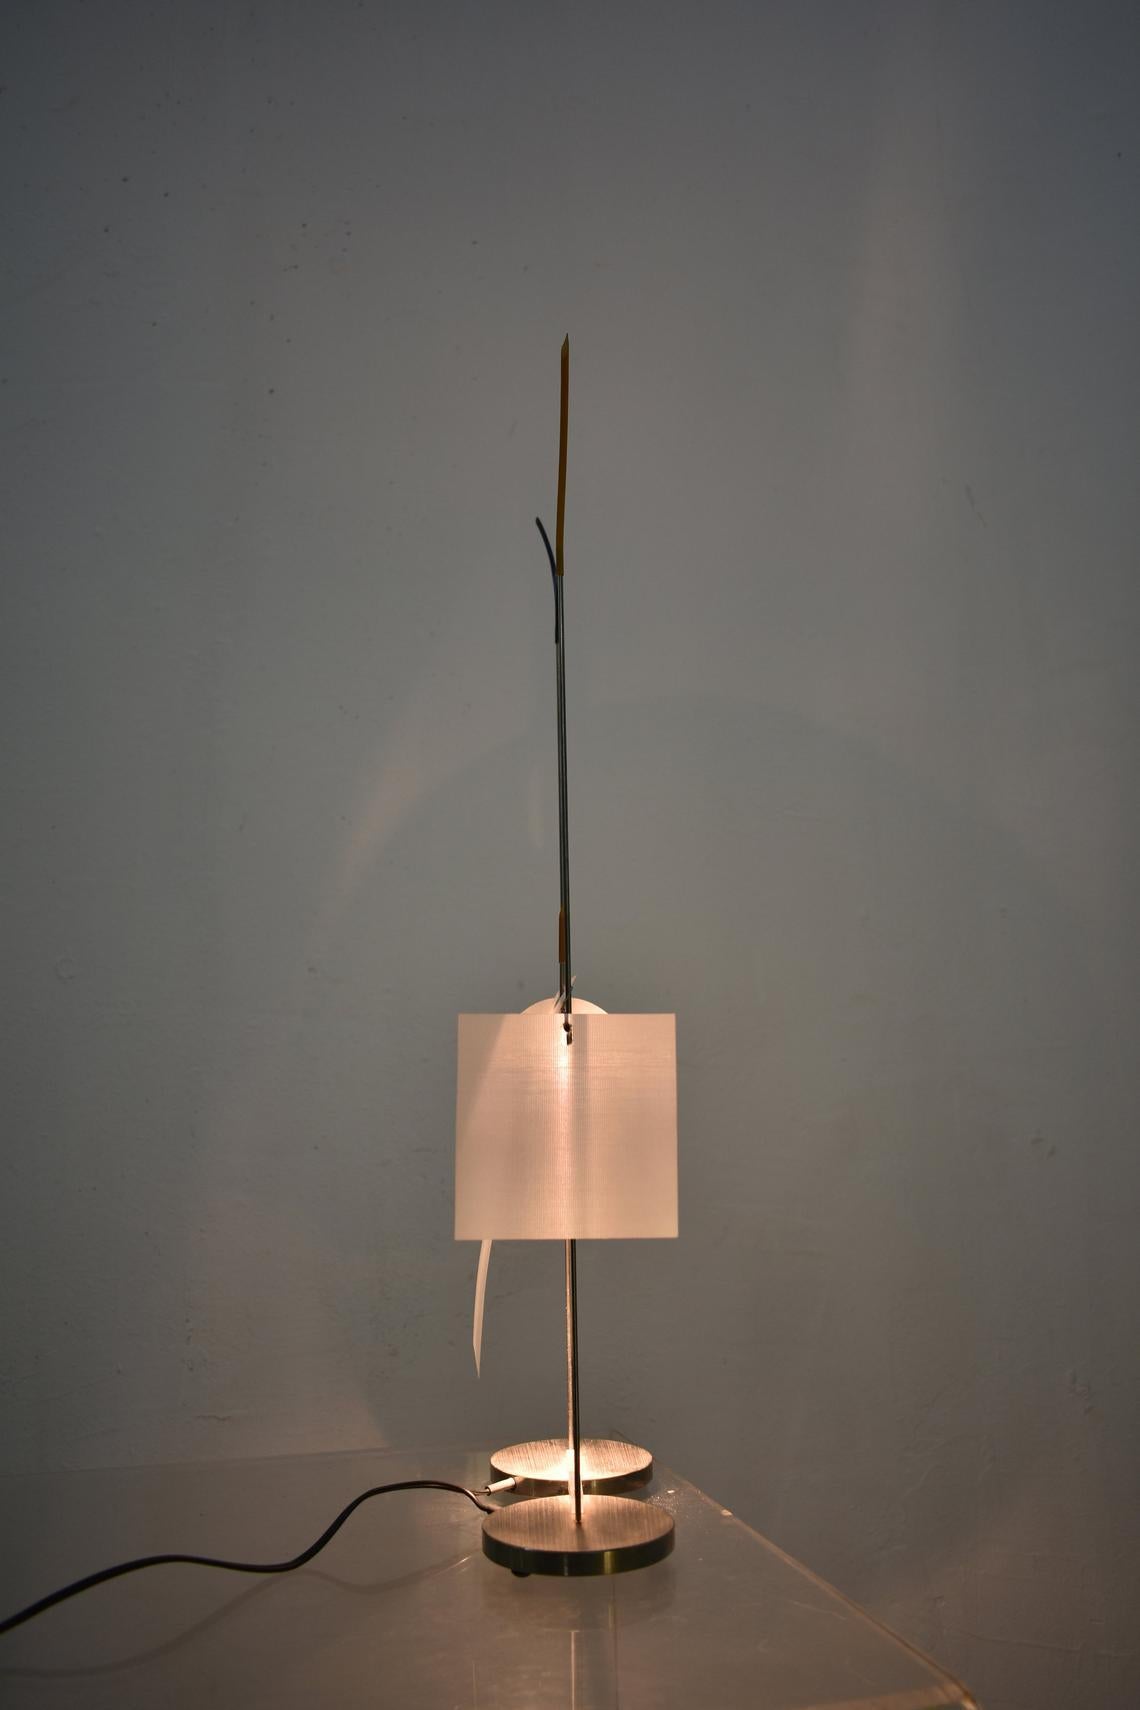 Nickel 'Fukushu' Table Lamp, Ingo Maurer for Design M, Germany, 1986